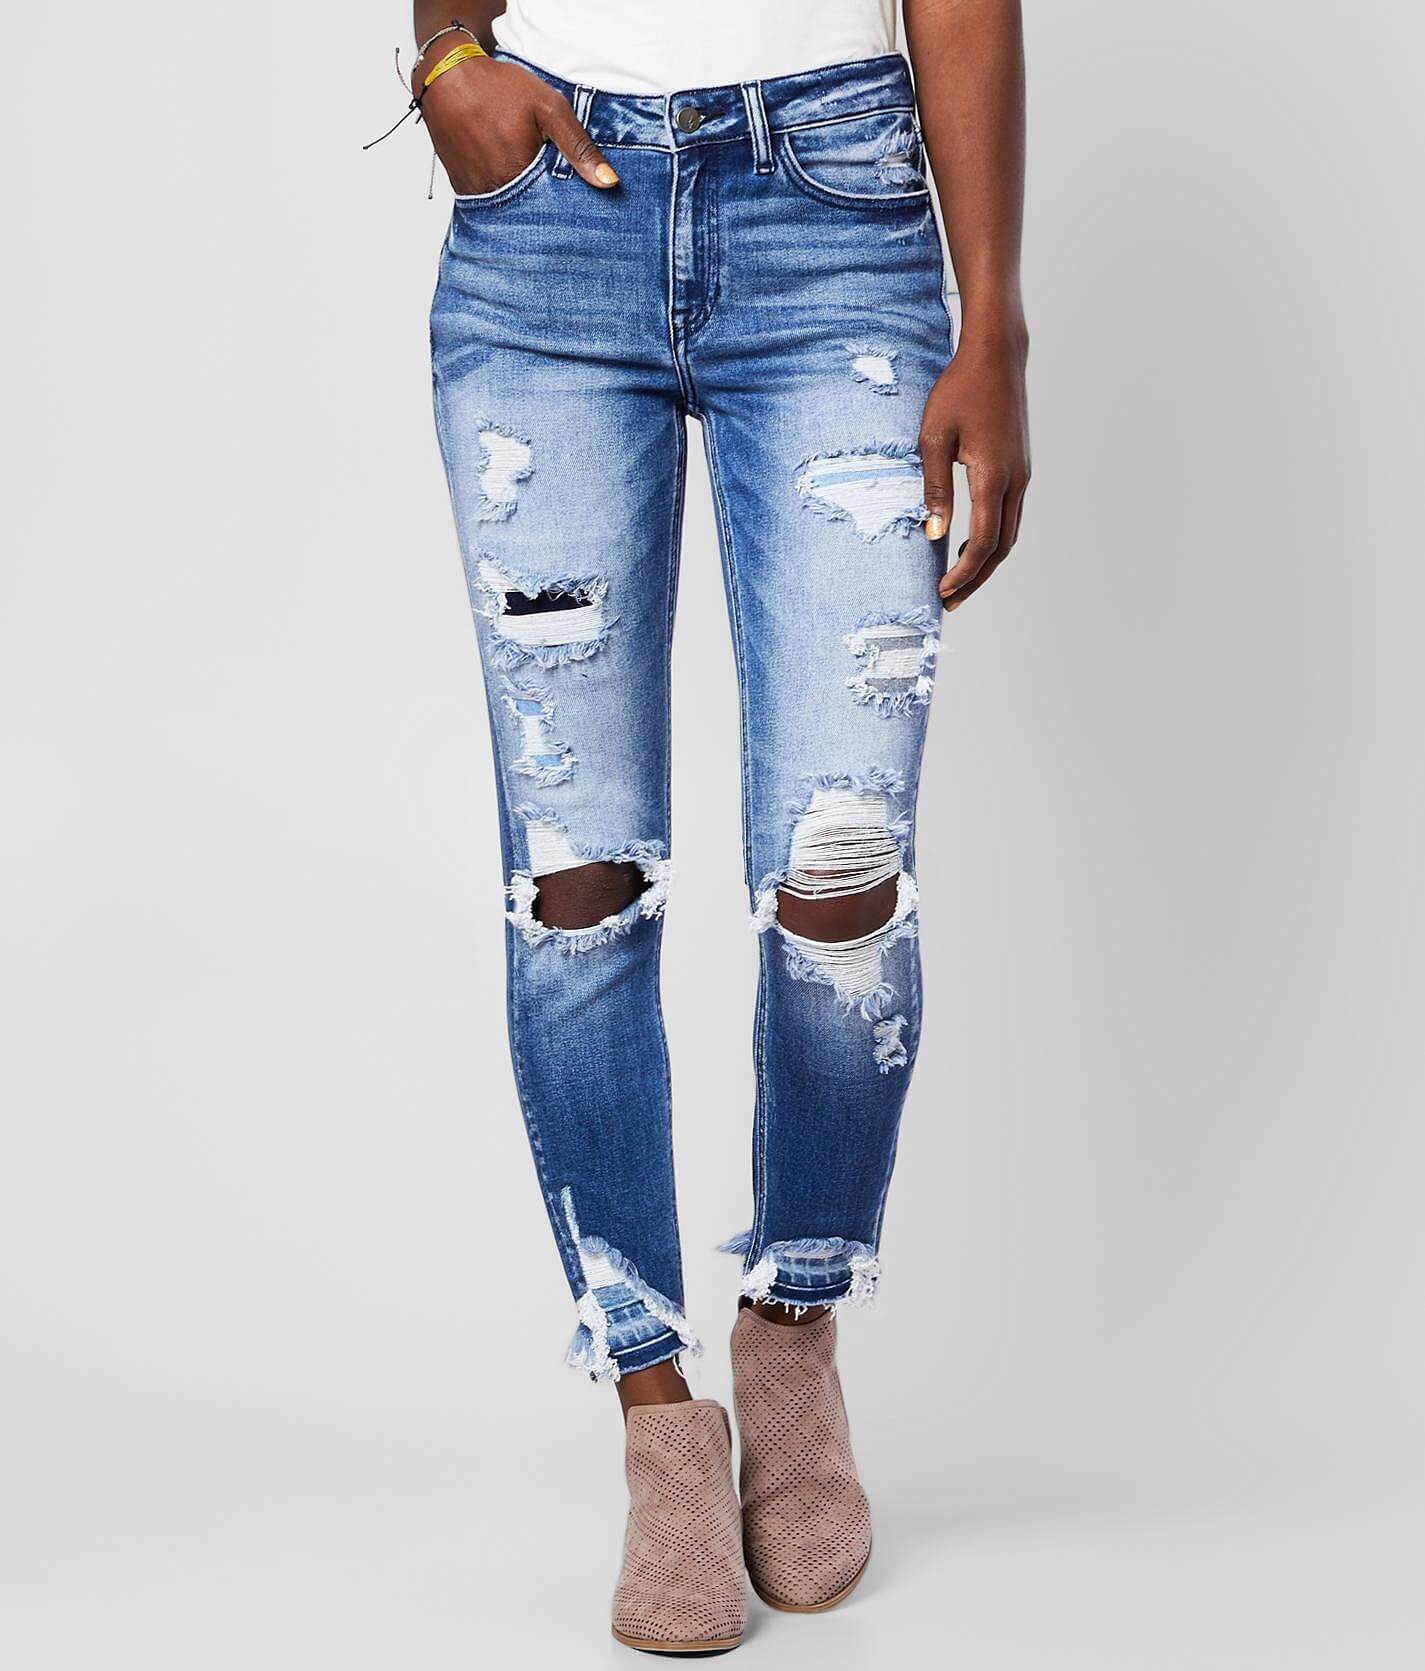 kancan jeans tall